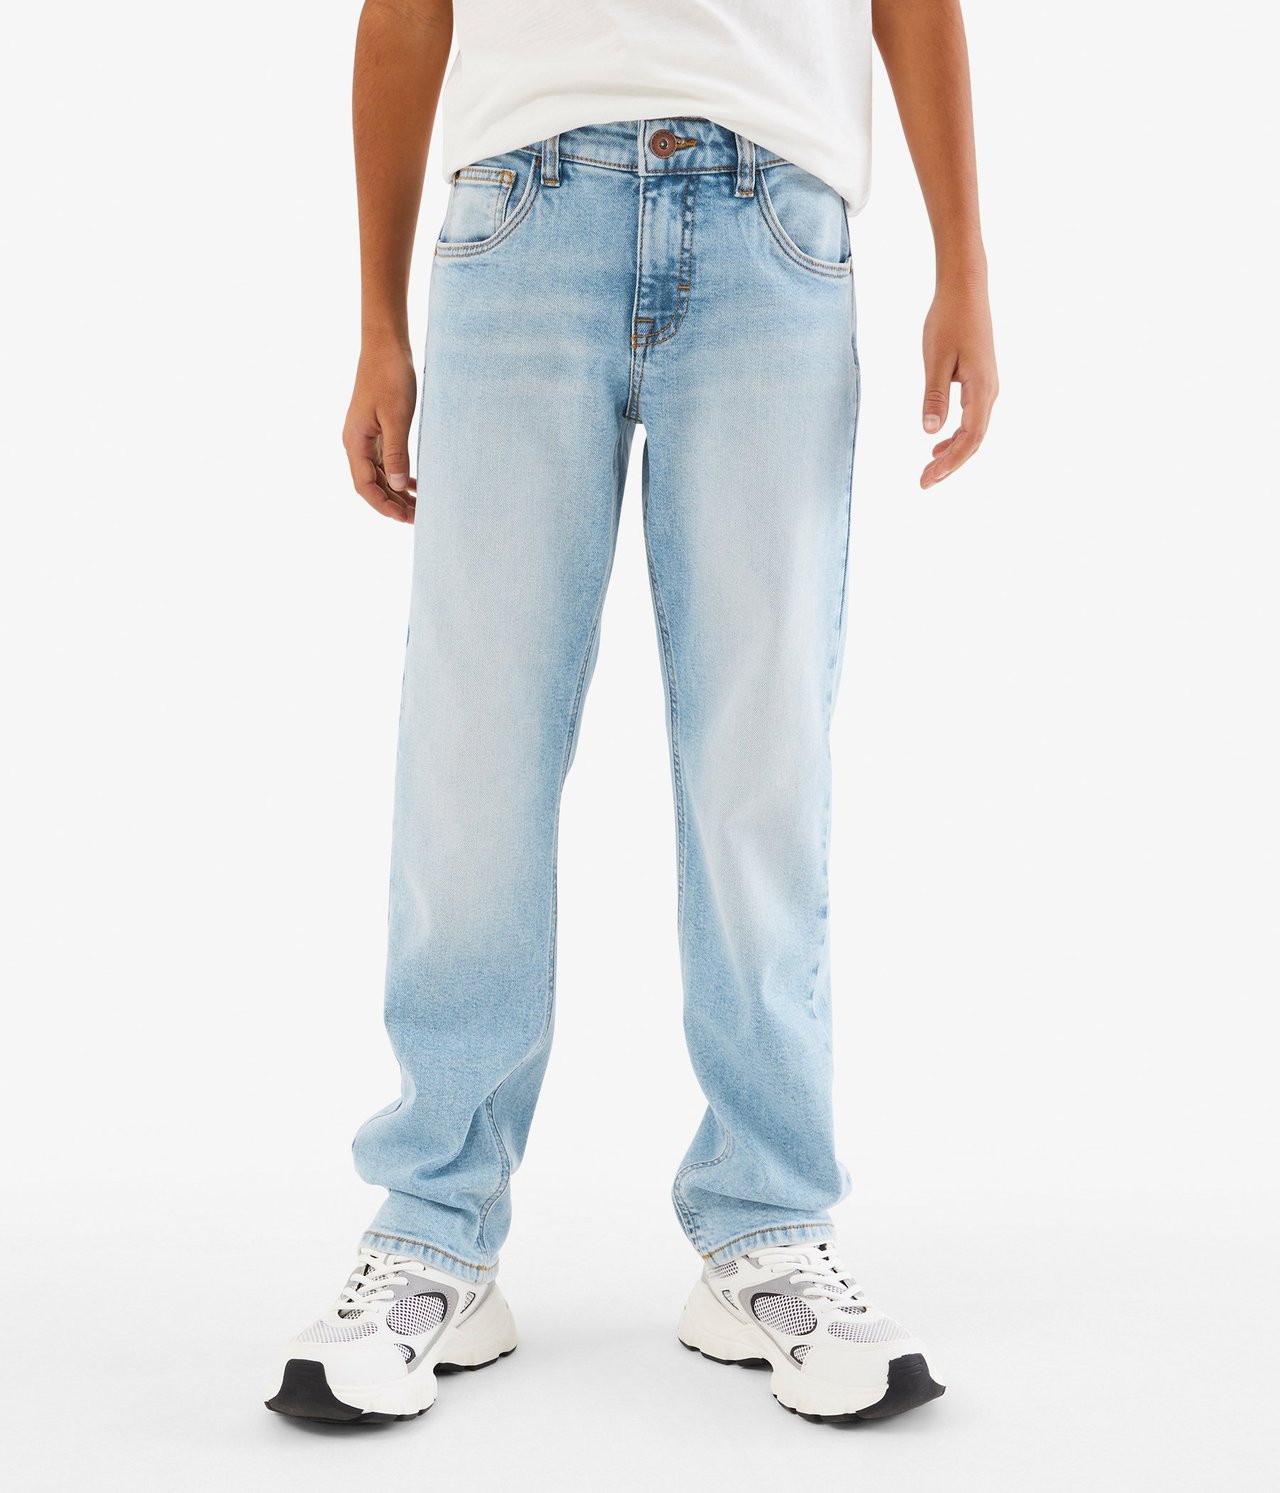 Retro jeans regular fit